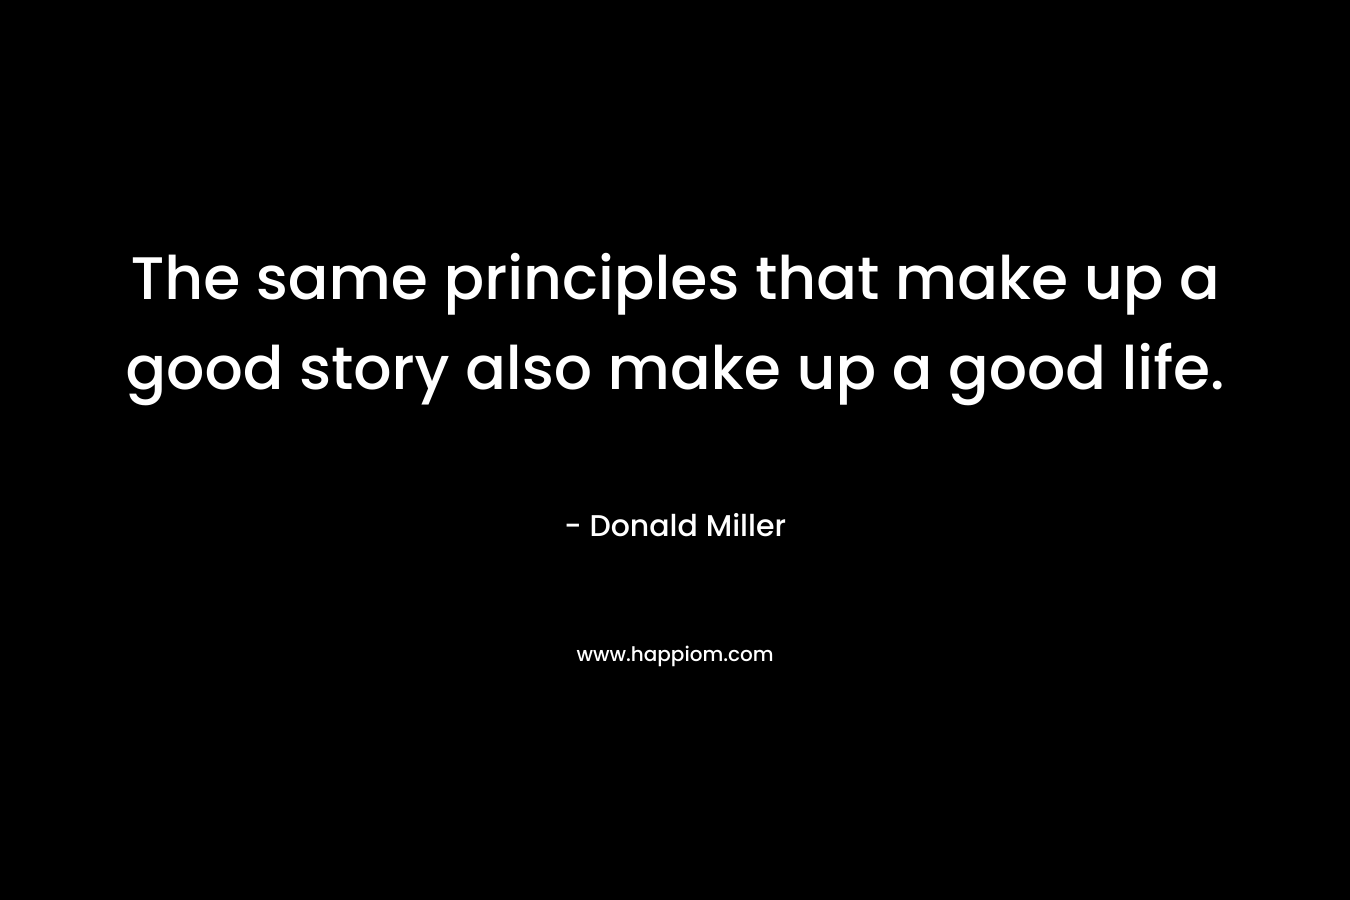 The same principles that make up a good story also make up a good life.